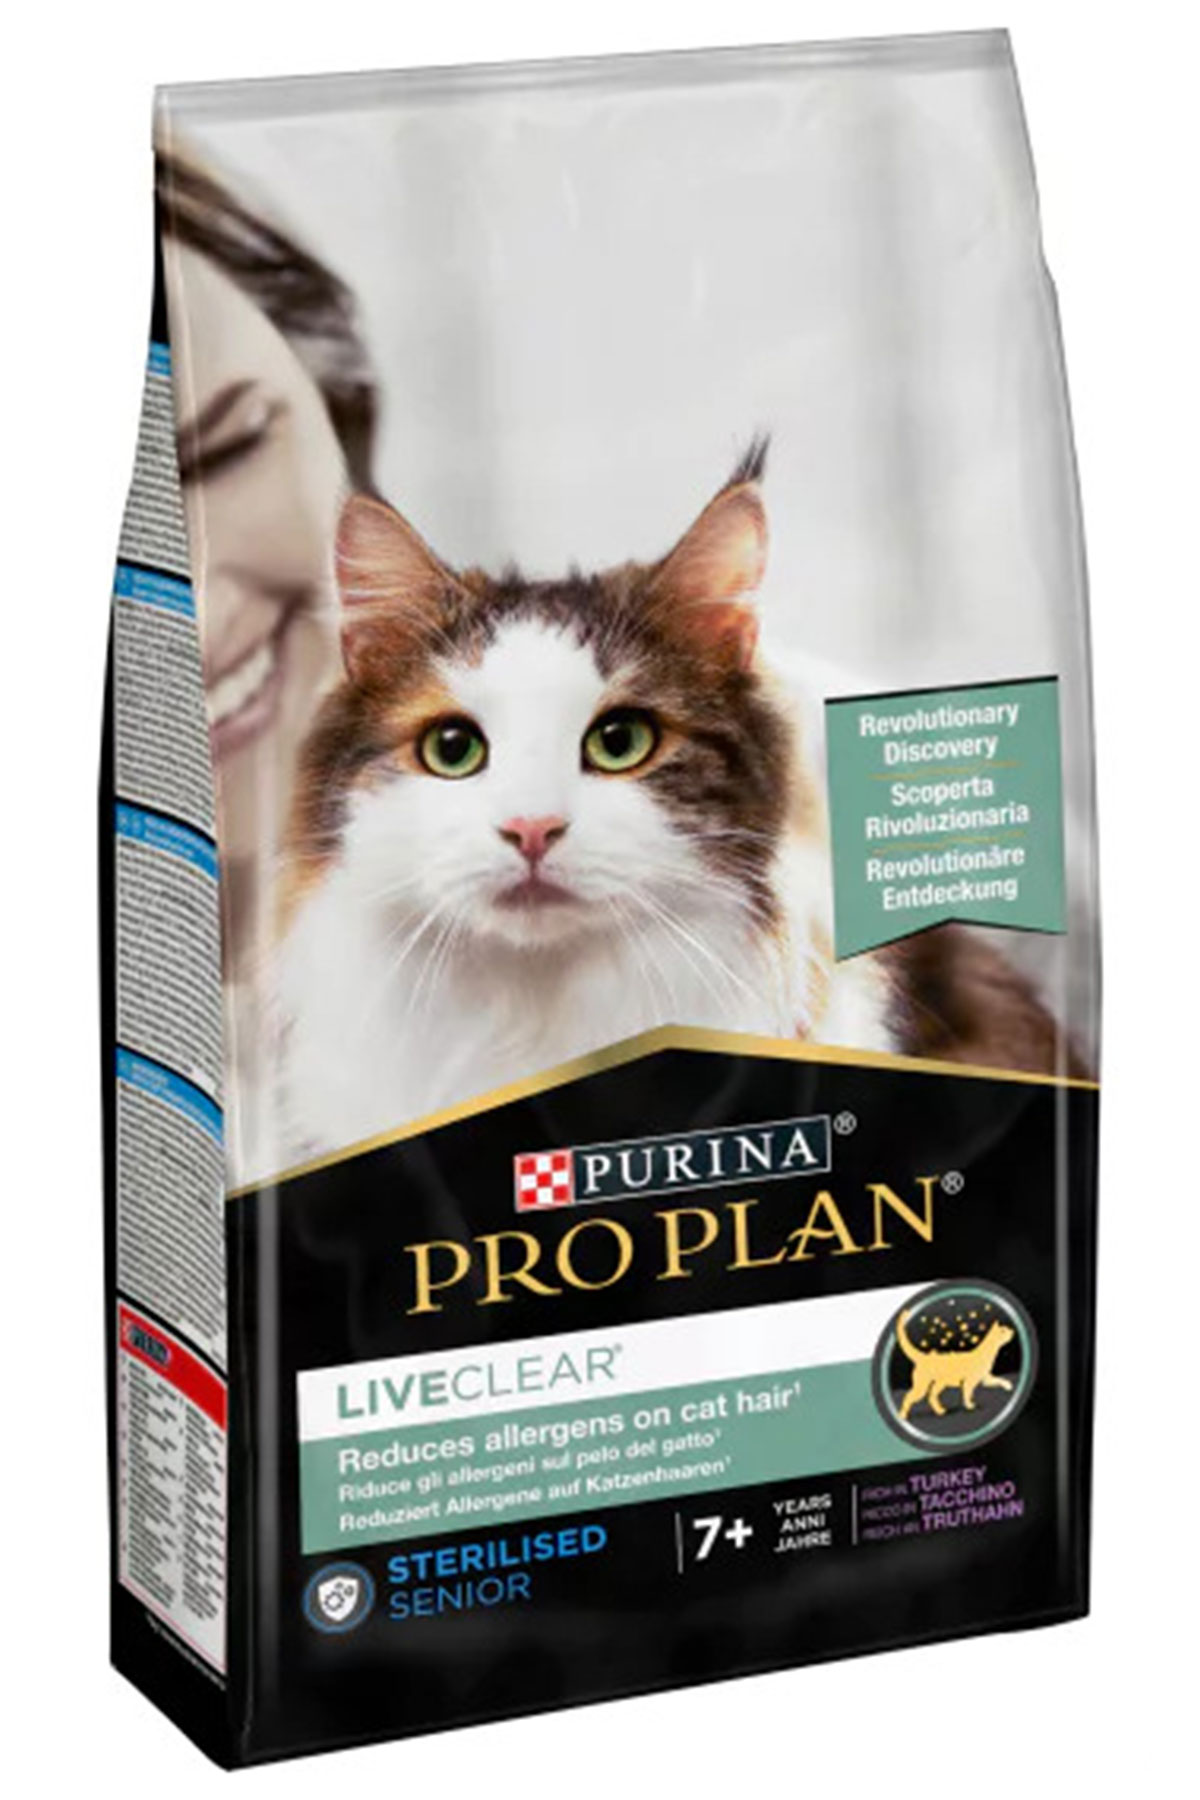 Pro Plan Liveclear Hindili Kısırlaştırılmış Yaşlı Kedi Maması 1.4kg